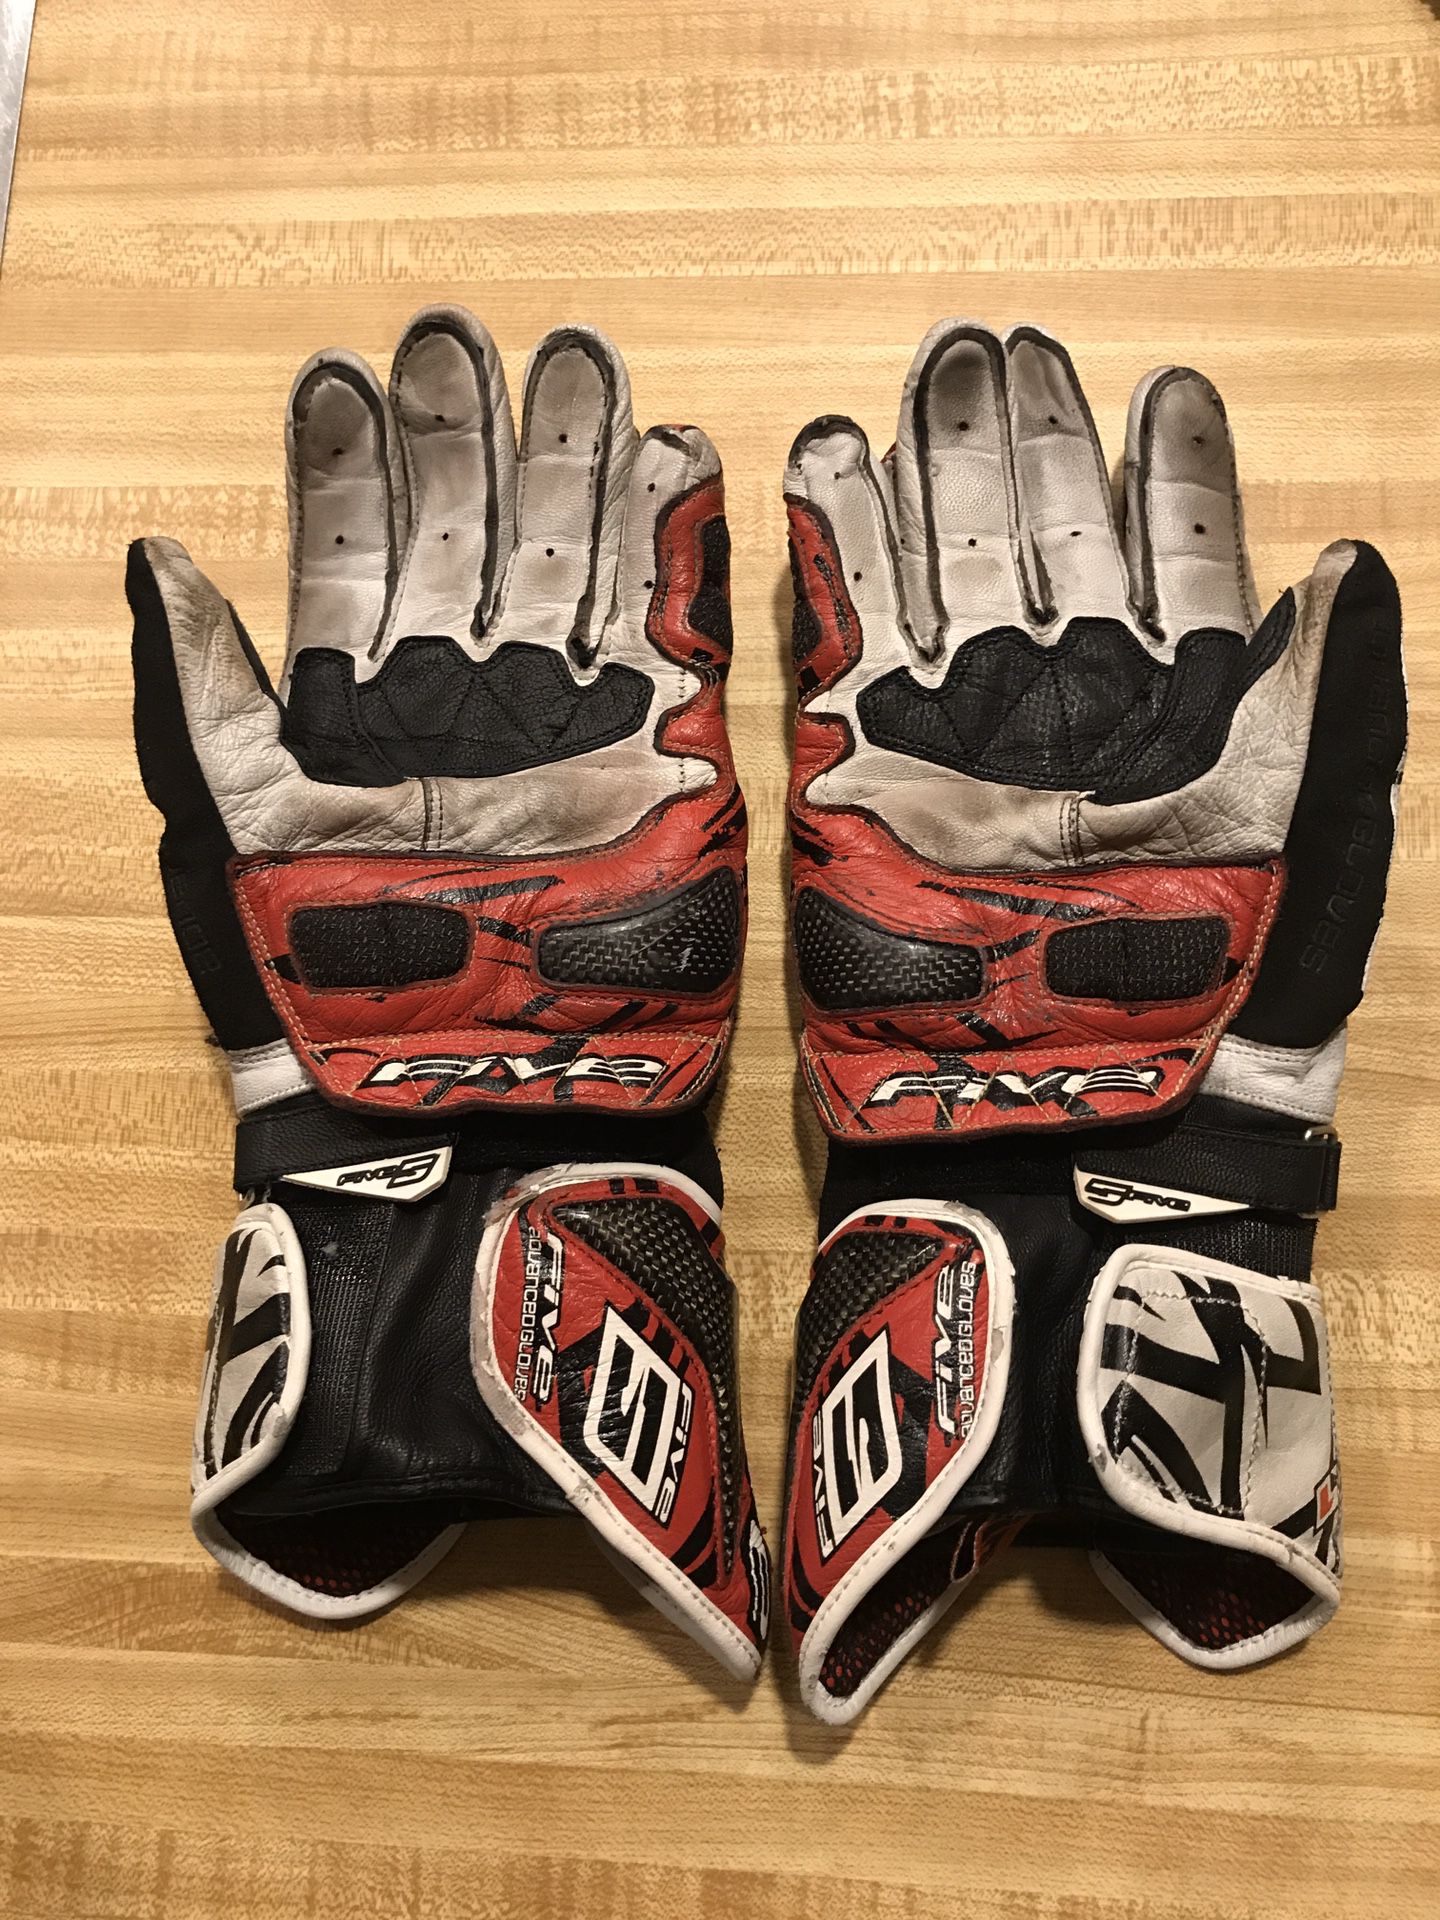 Five RFX1 Replica Attack Gloves for Sale in Escondido, CA - OfferUp